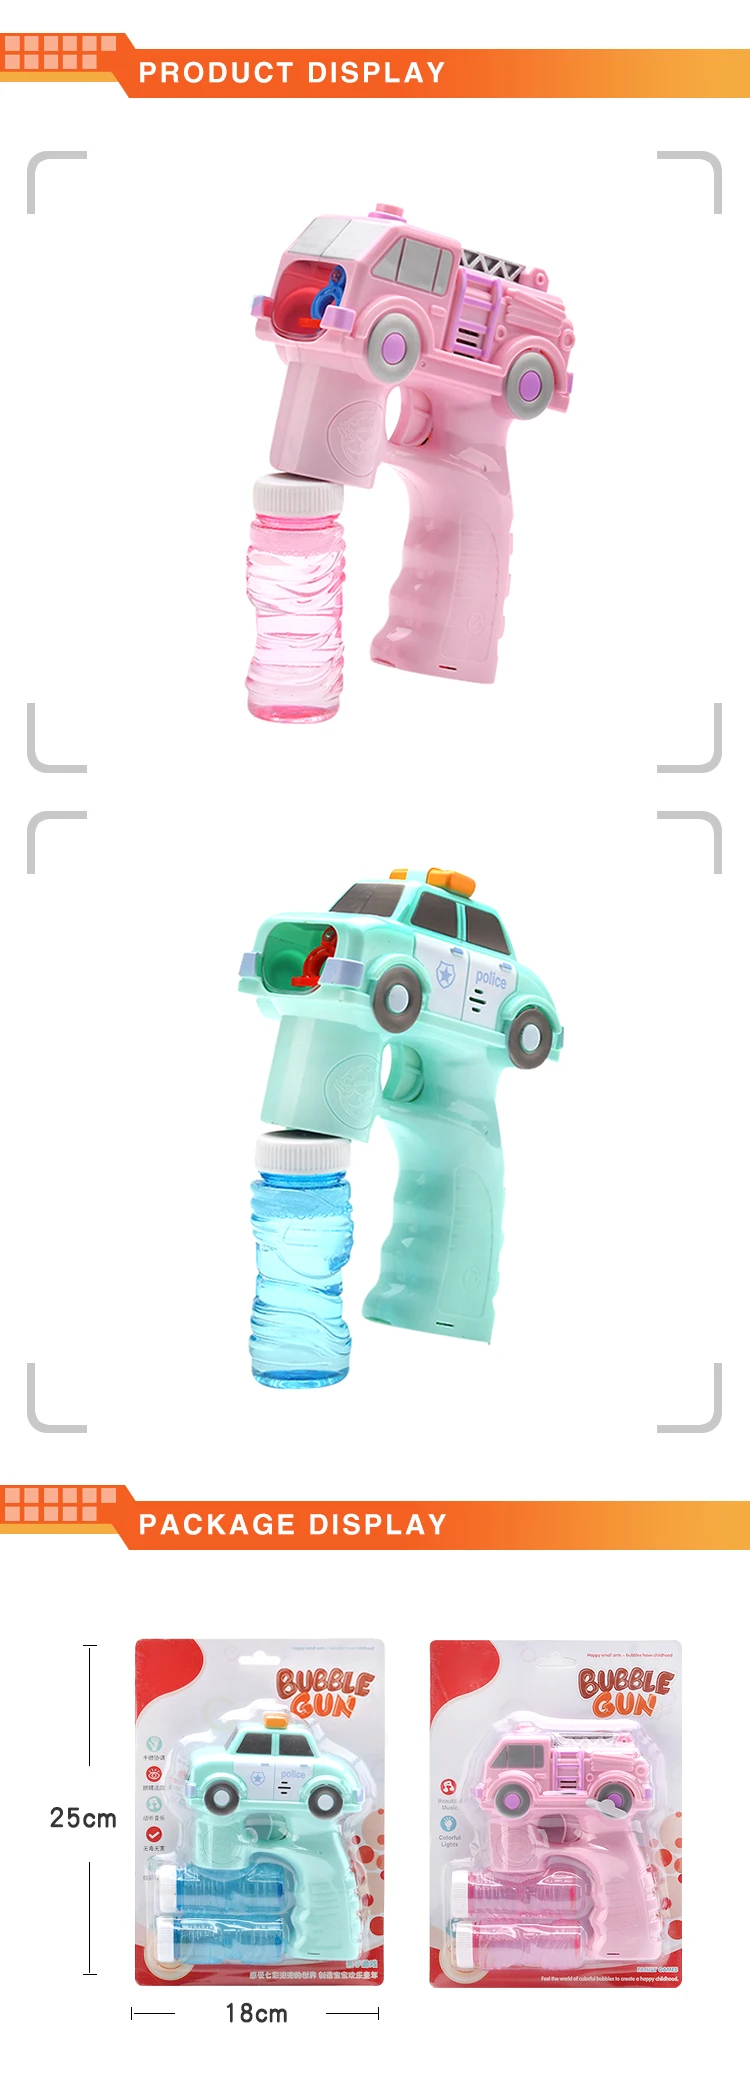 Eco-friendly automatic bubble gun fire truck police car bubble soap toys with music lamplight